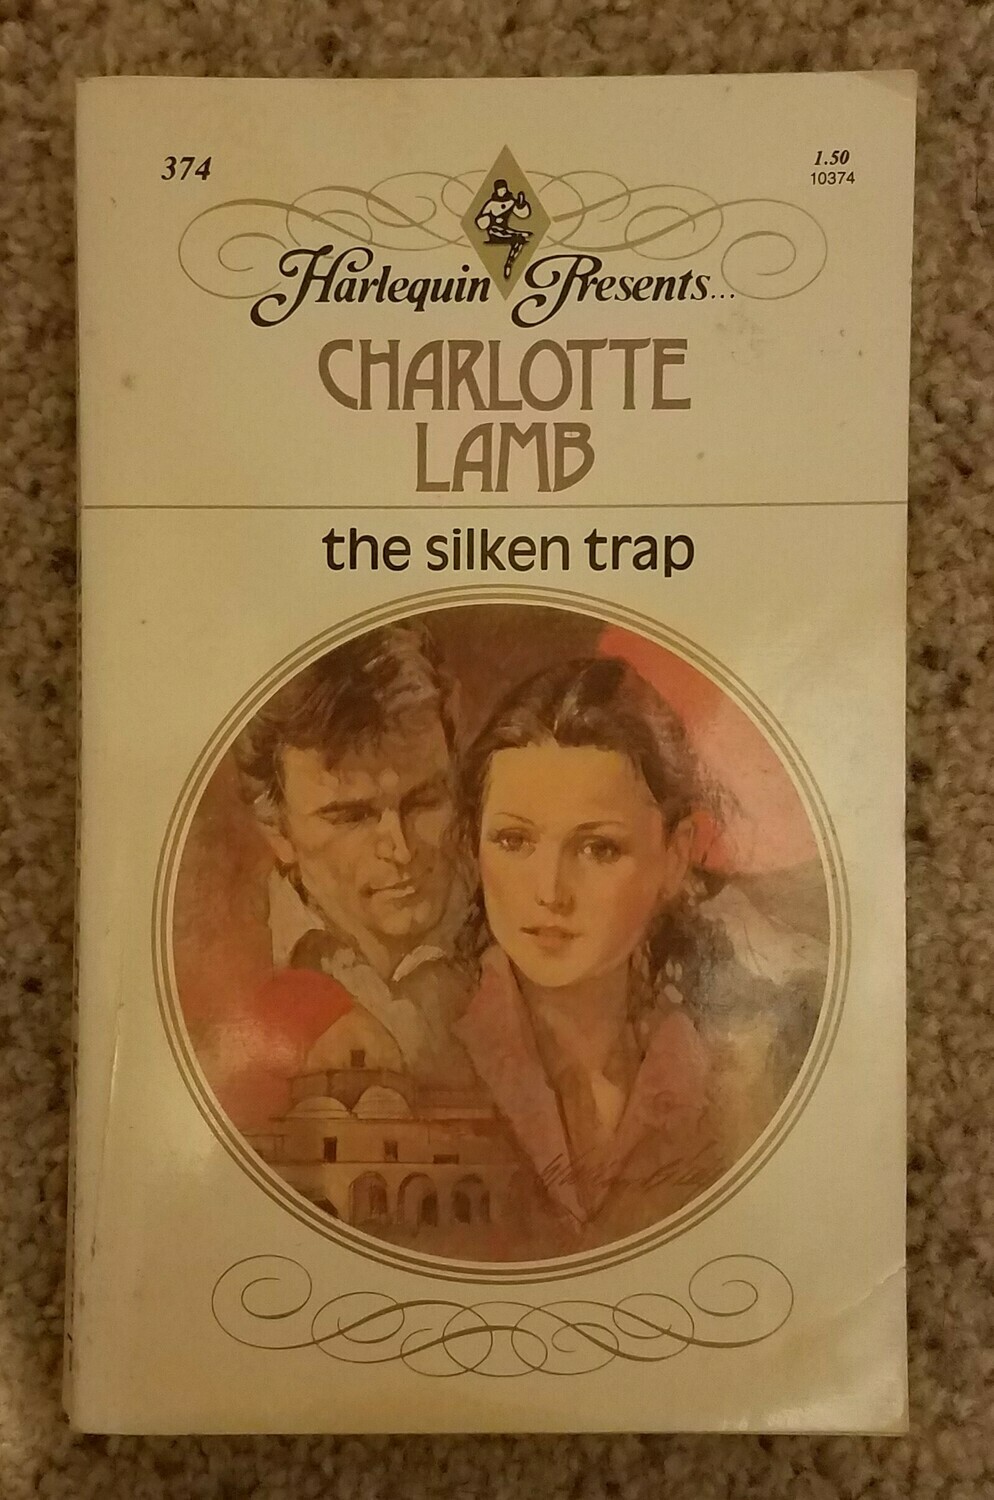 The Silken Trap by Charlotte Lamb